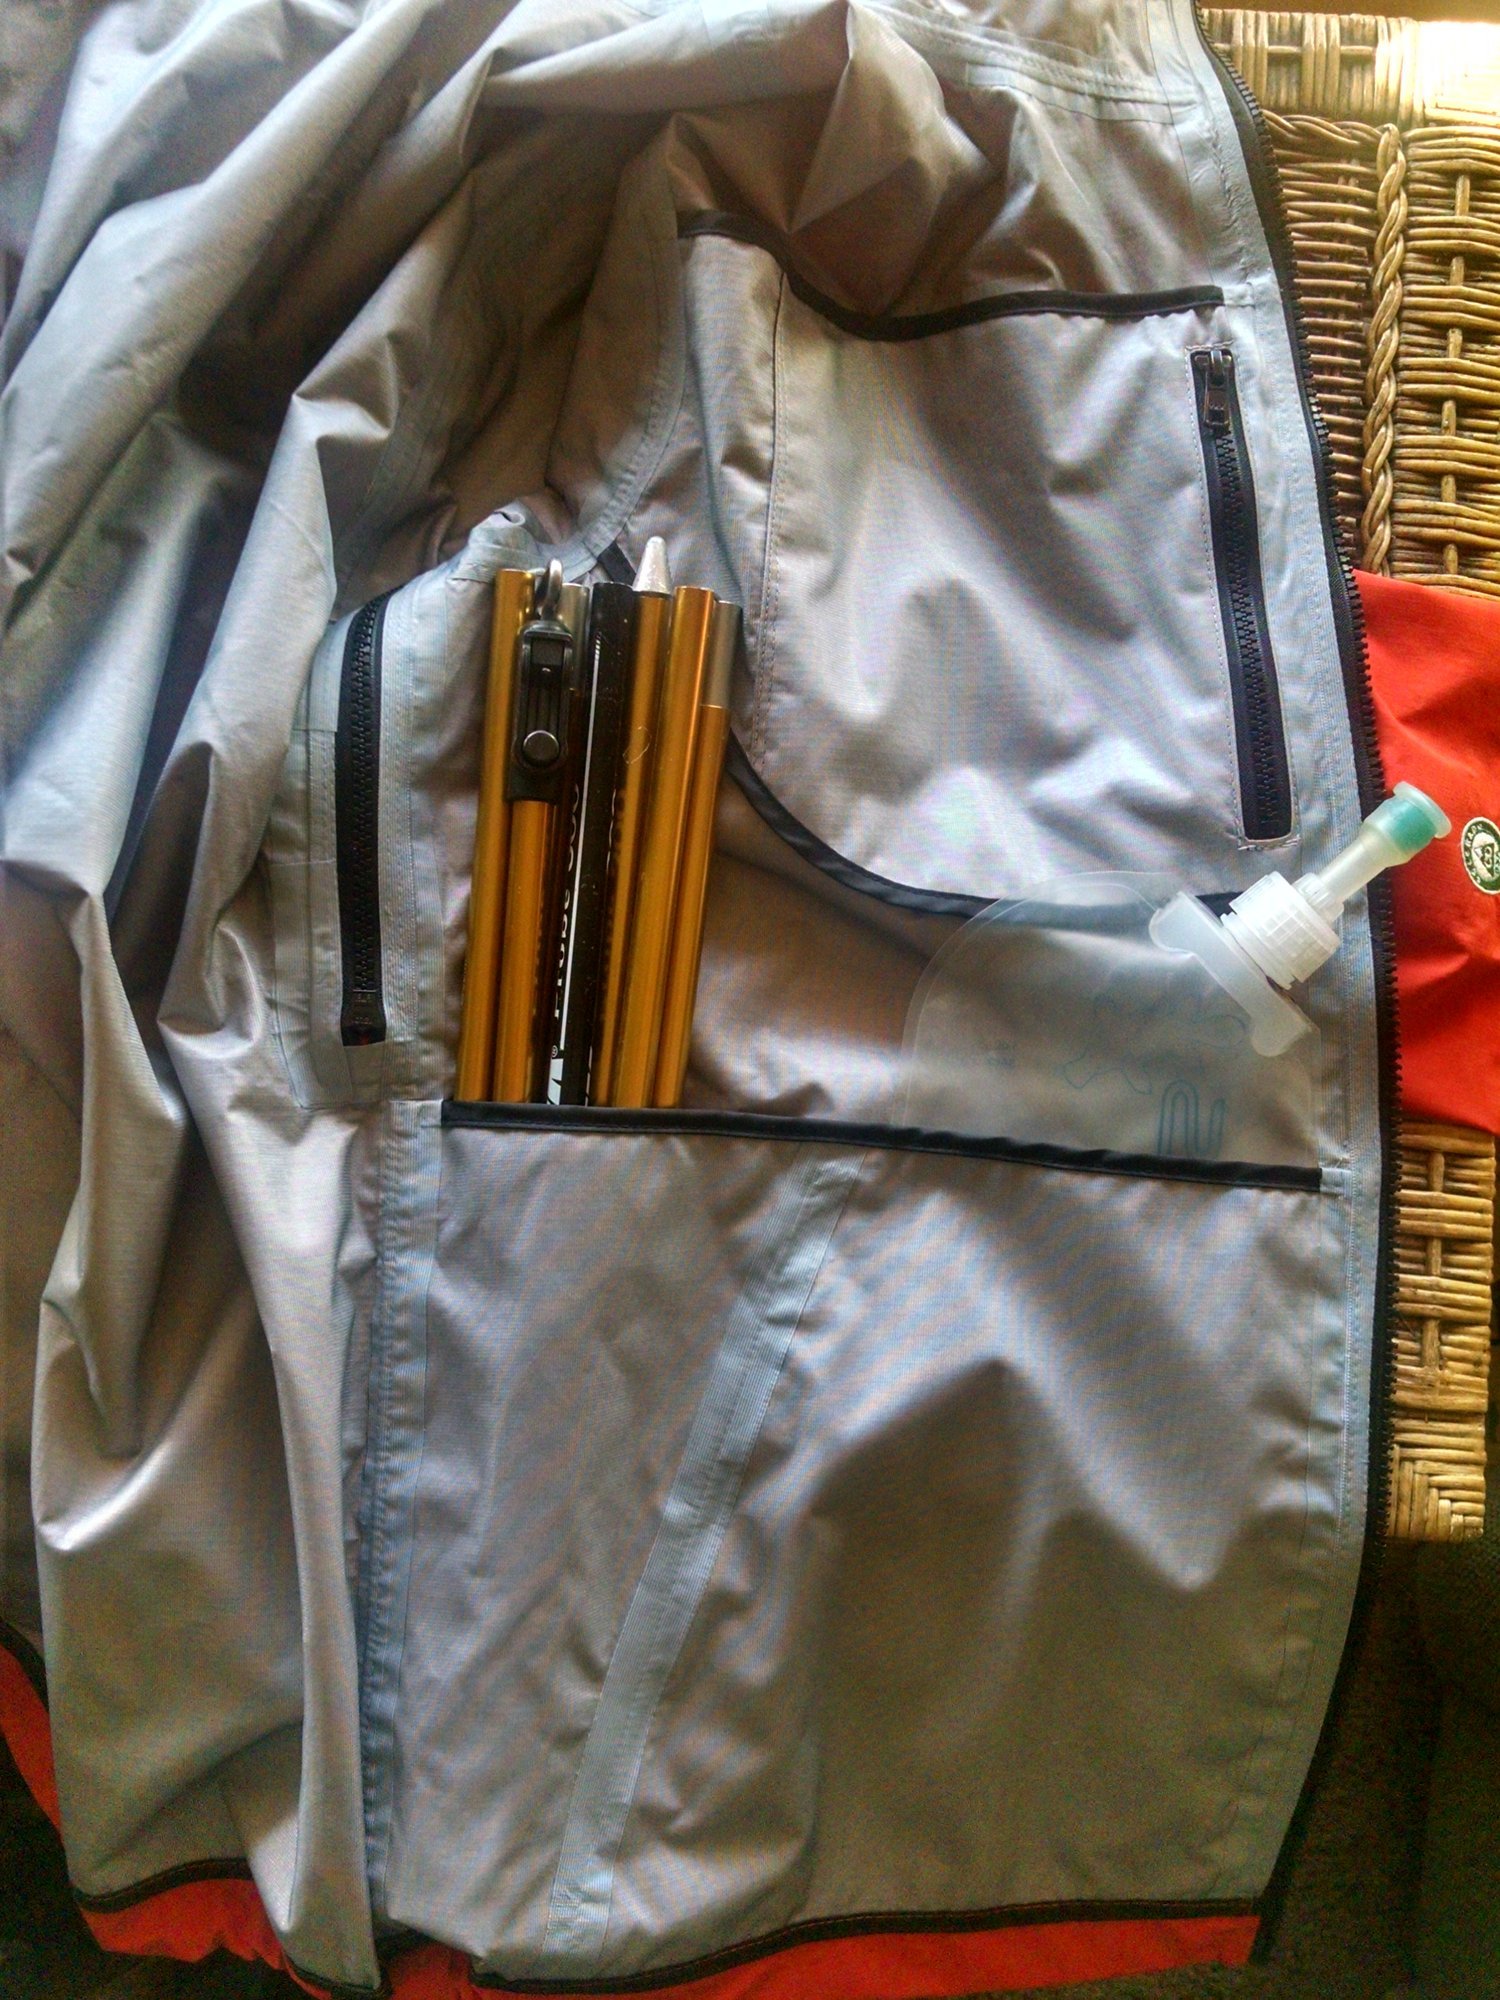 Image of Antero II Plus Hardshell Polartec Neoshell Jacket Made in Colorado Ice Blue